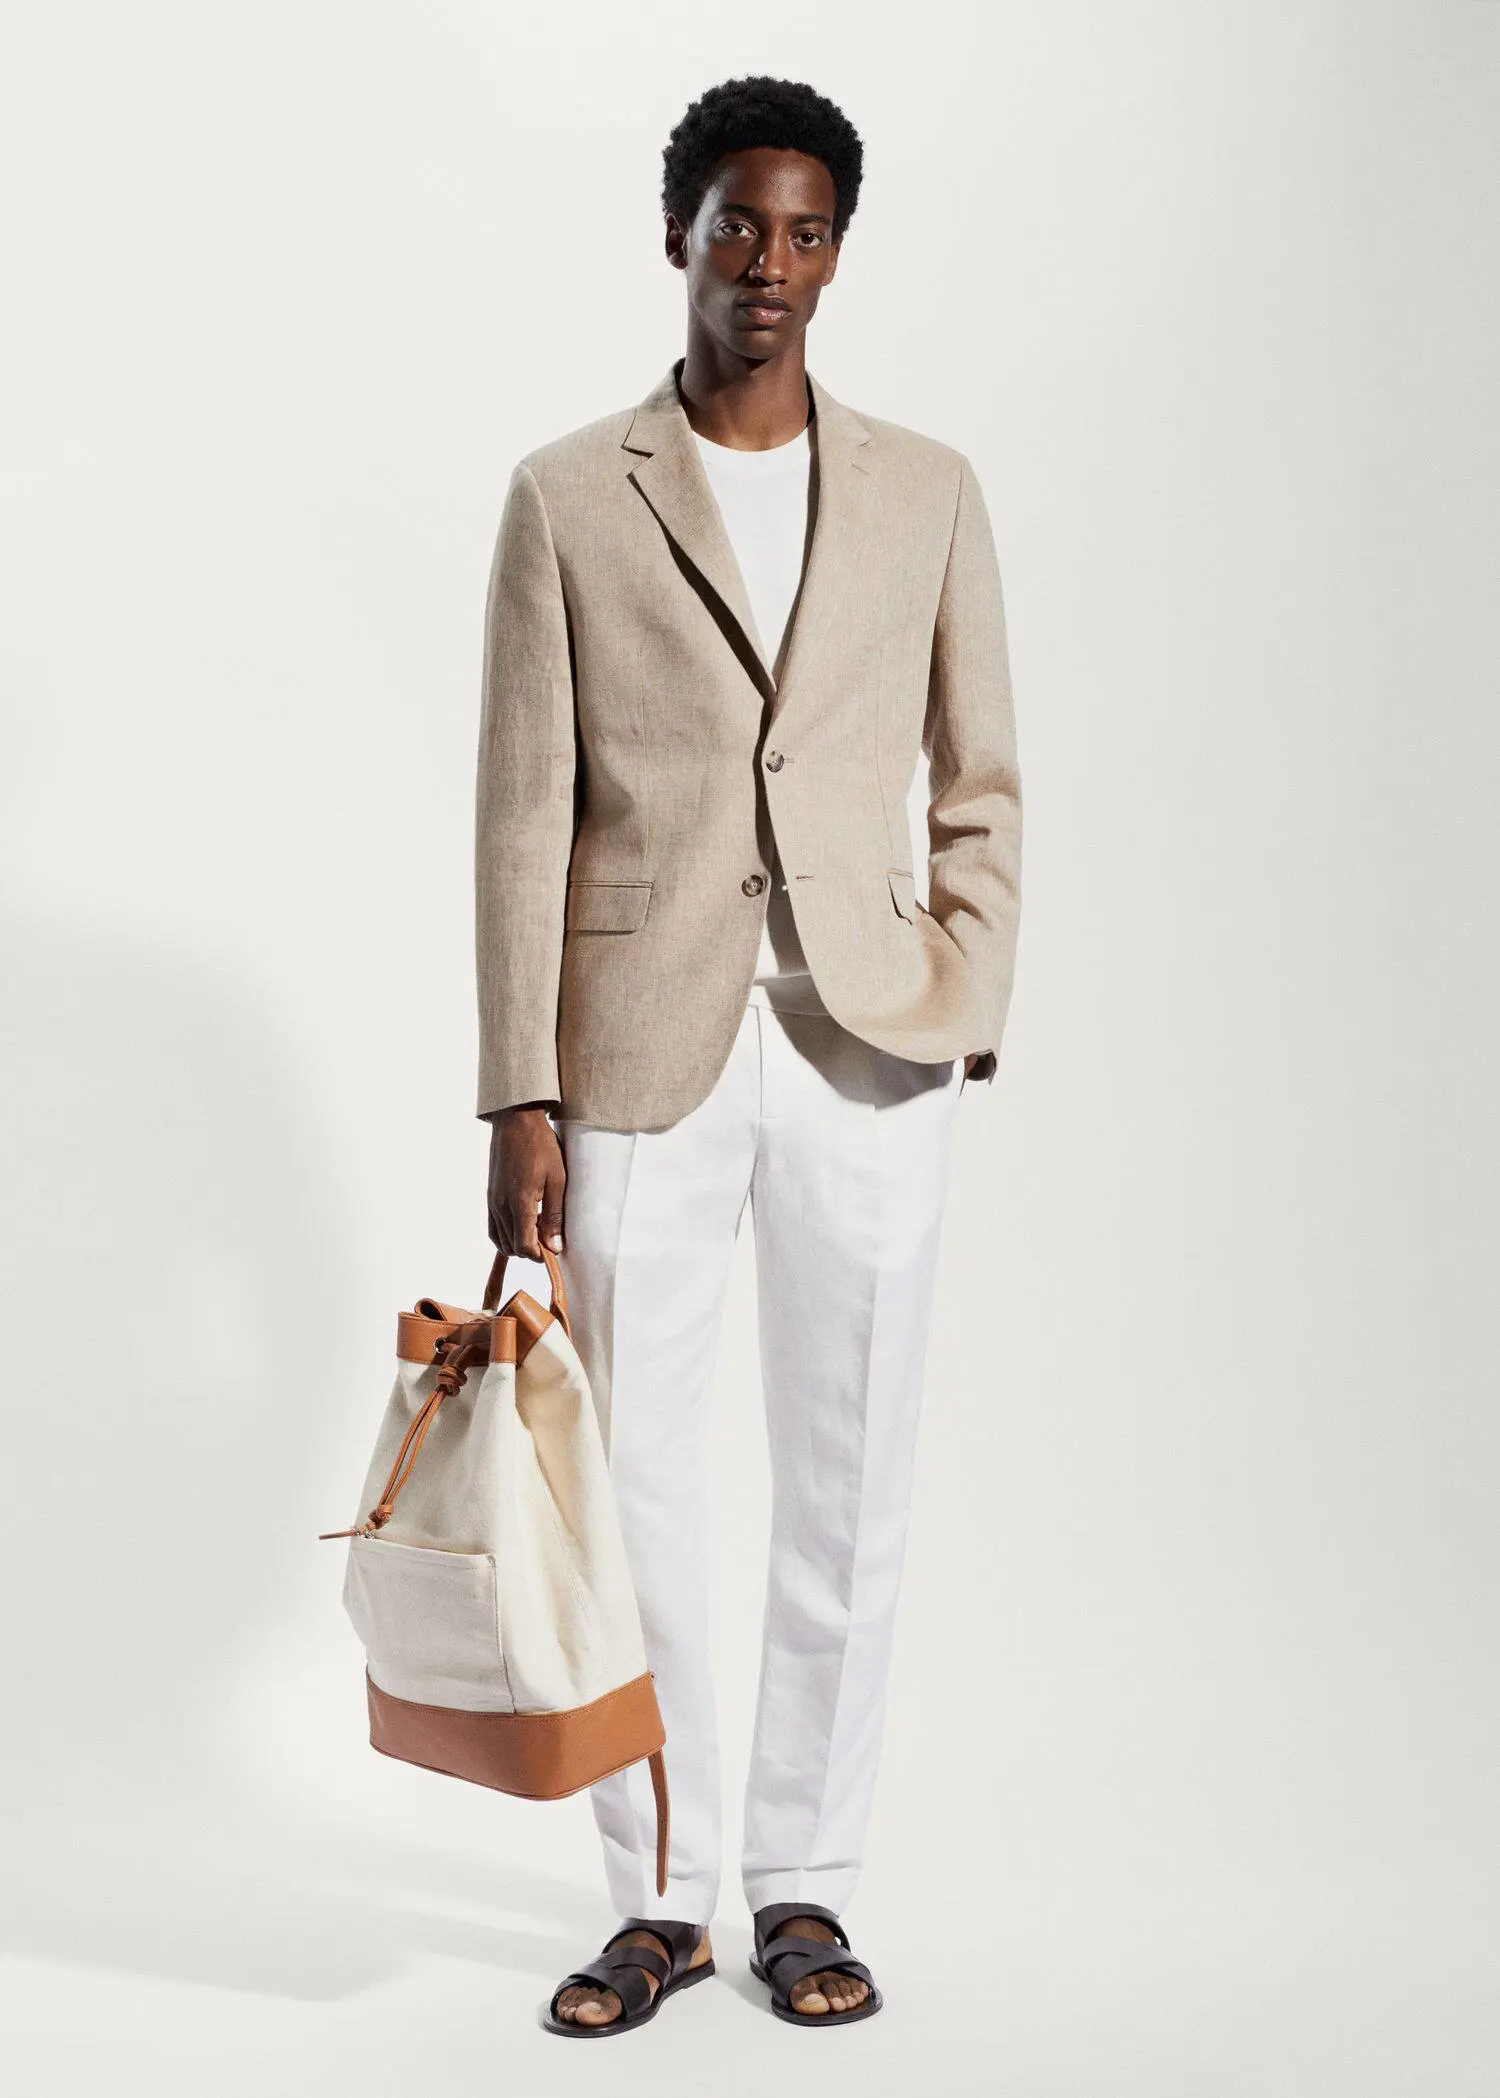 Mango 100% linen slim fit blazer. a man in a suit holding a bag. 